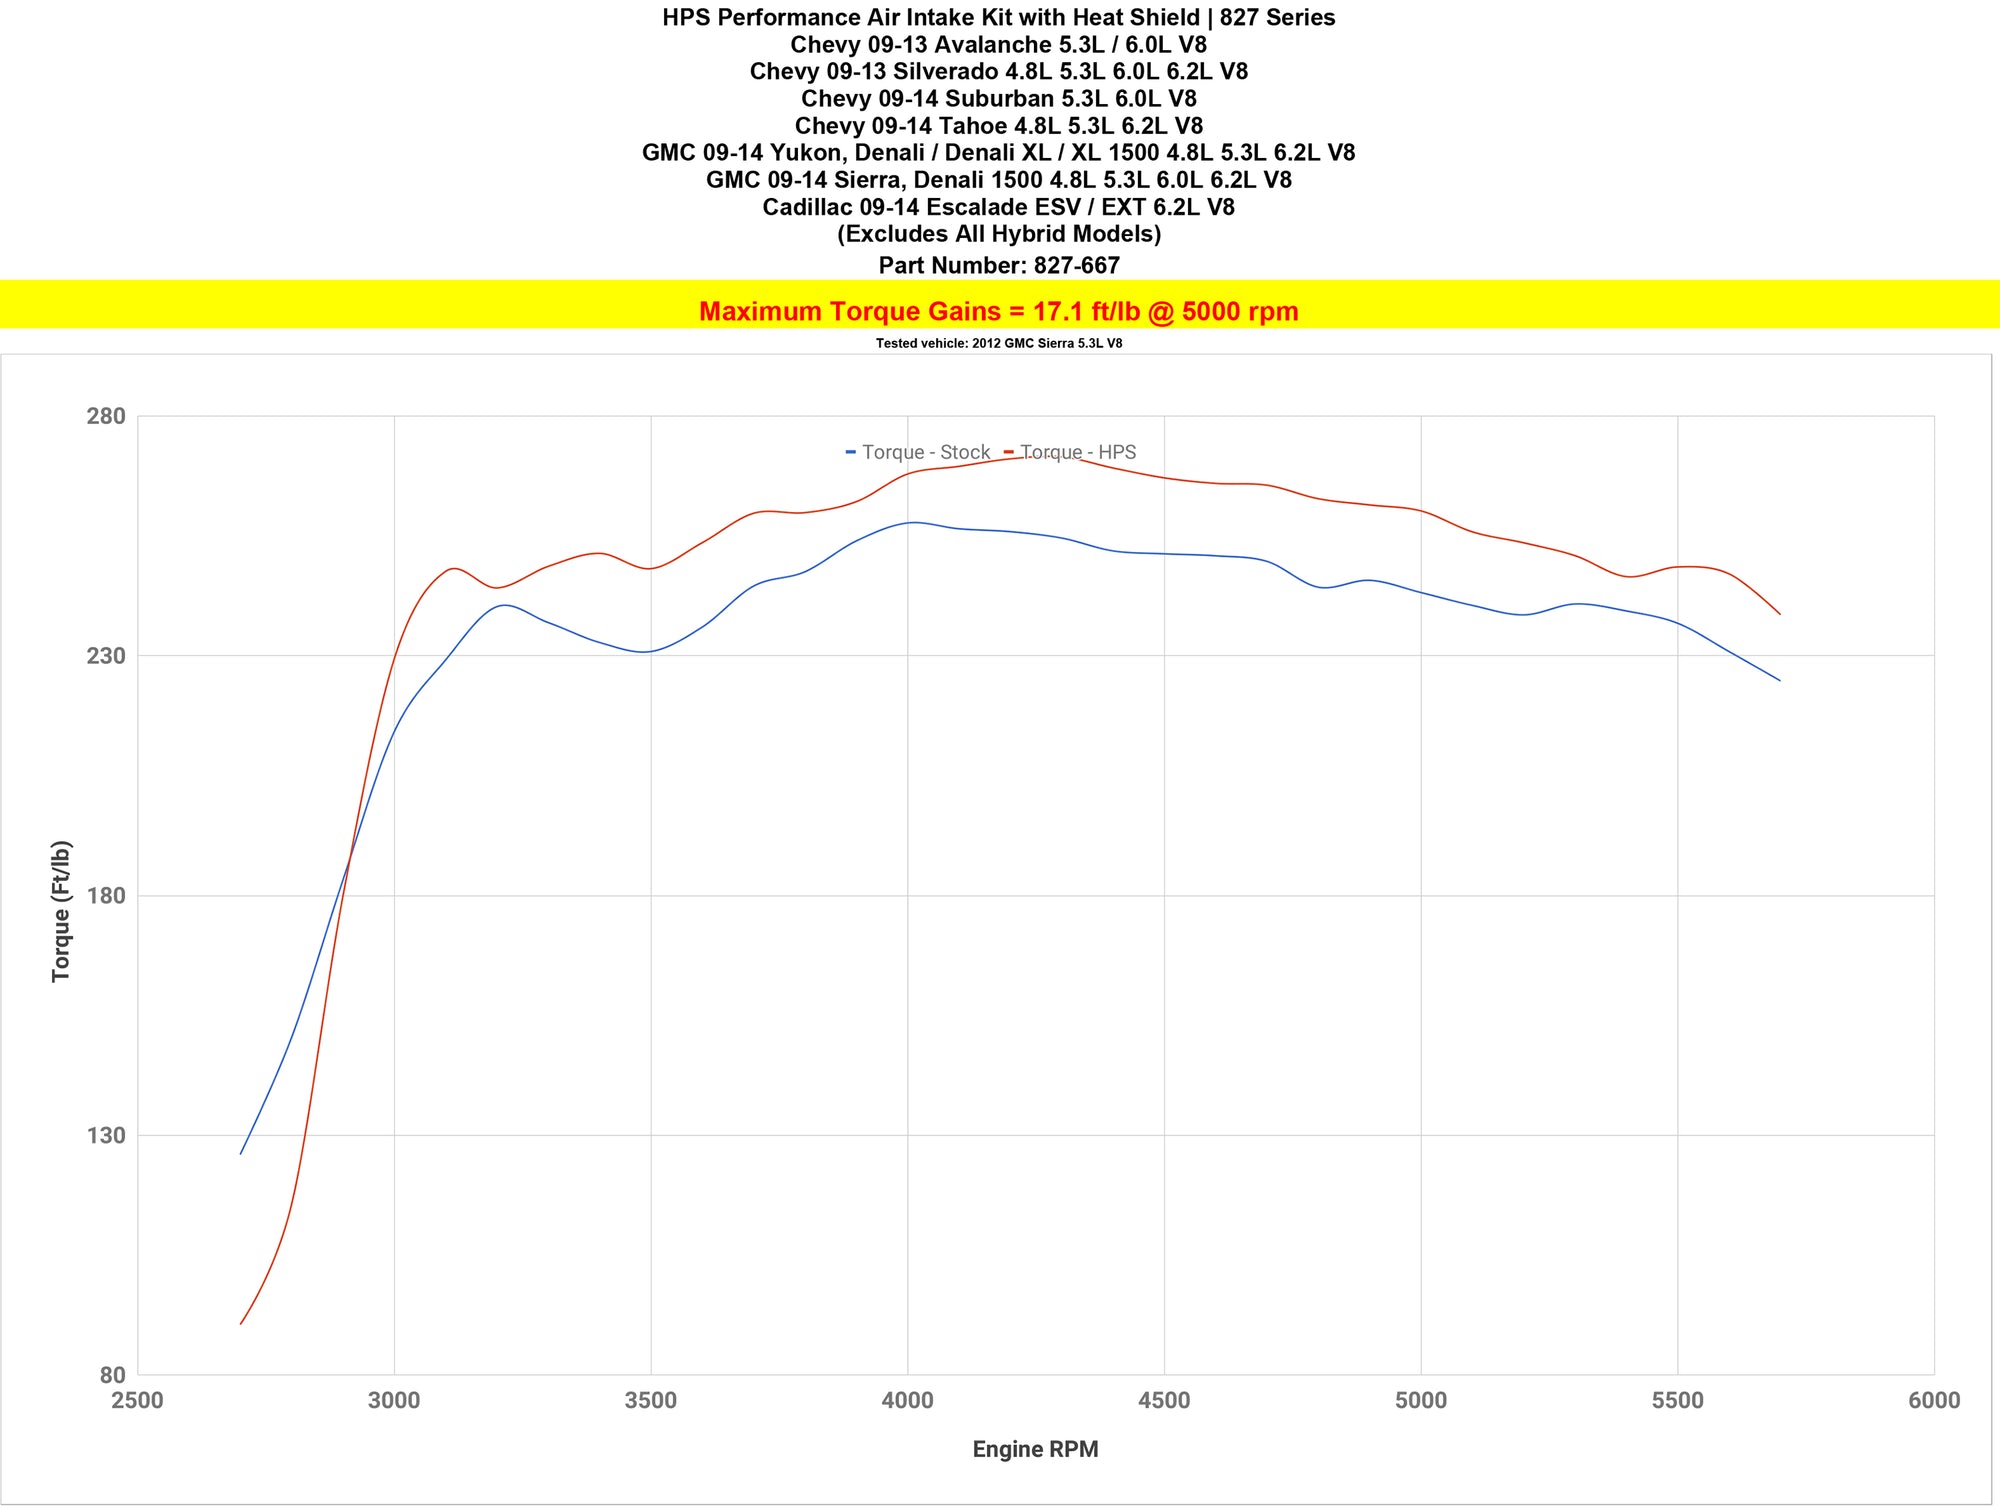 Dyno proven gains 17.1 ft/lb HPS Performance Shortram Air Intake Kit 2009-2014 Chevy Tahoe 4.8L 5.3L 6.2L V8 (Excludes Hybrid) 827-667R